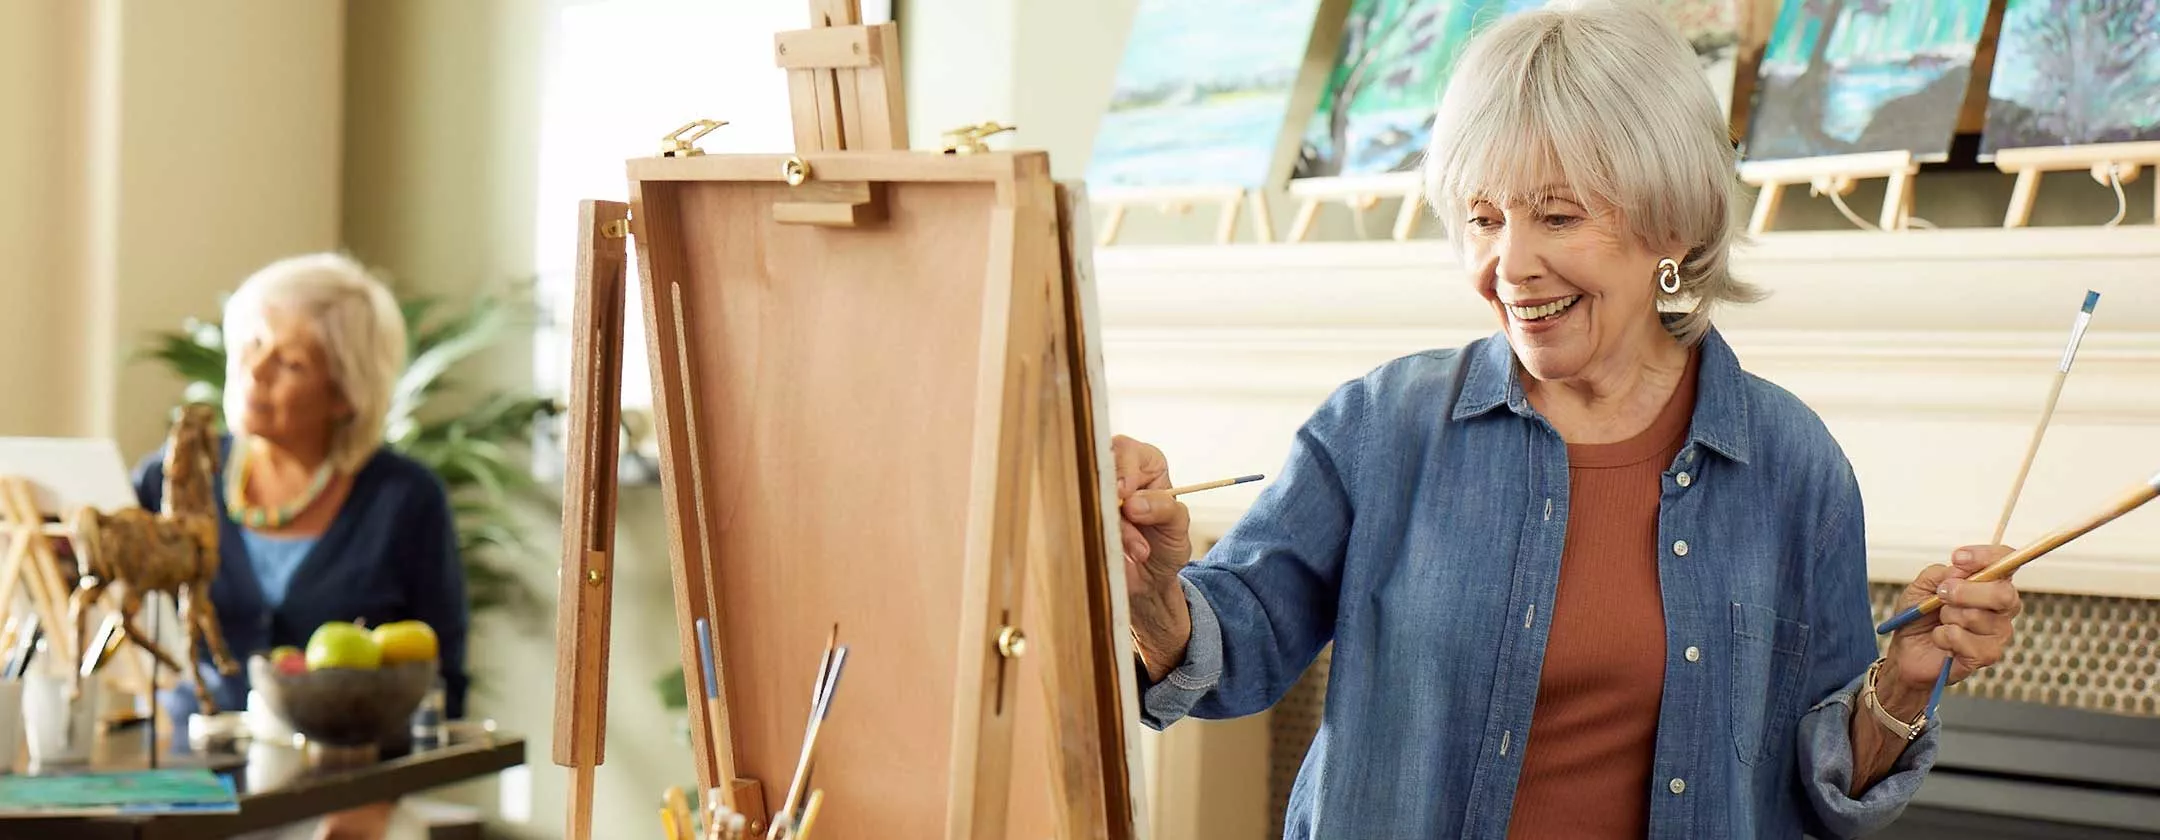 Senior lady painting on easel in art studio